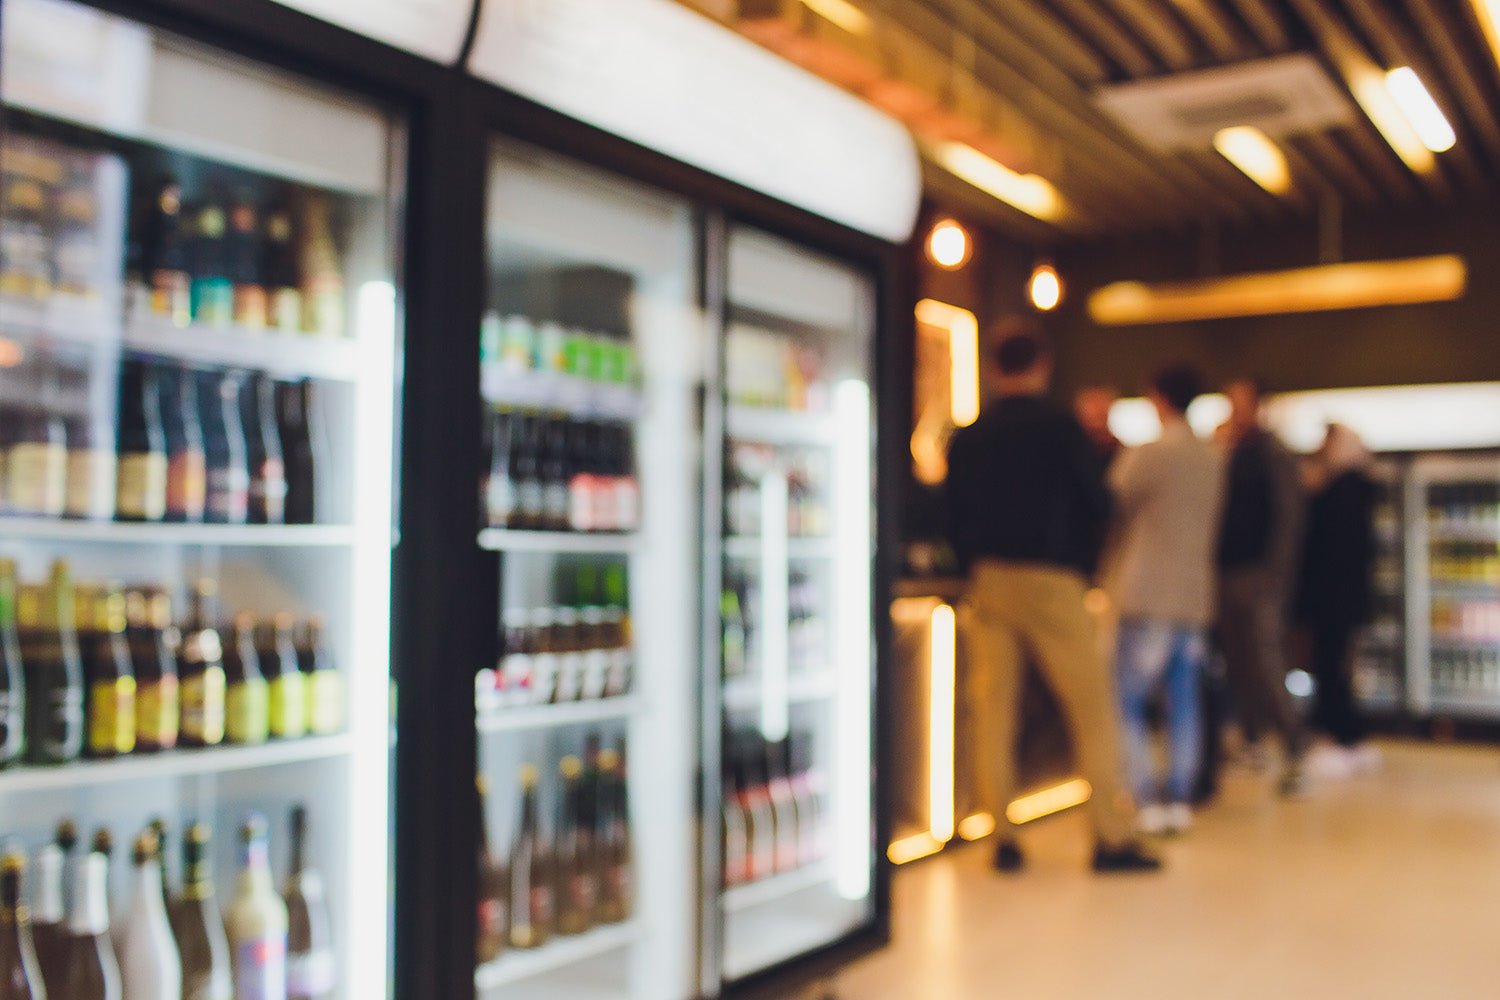 Choosing the Best Commercial Refrigerator - Kitchen Pro Restaurant Equipment